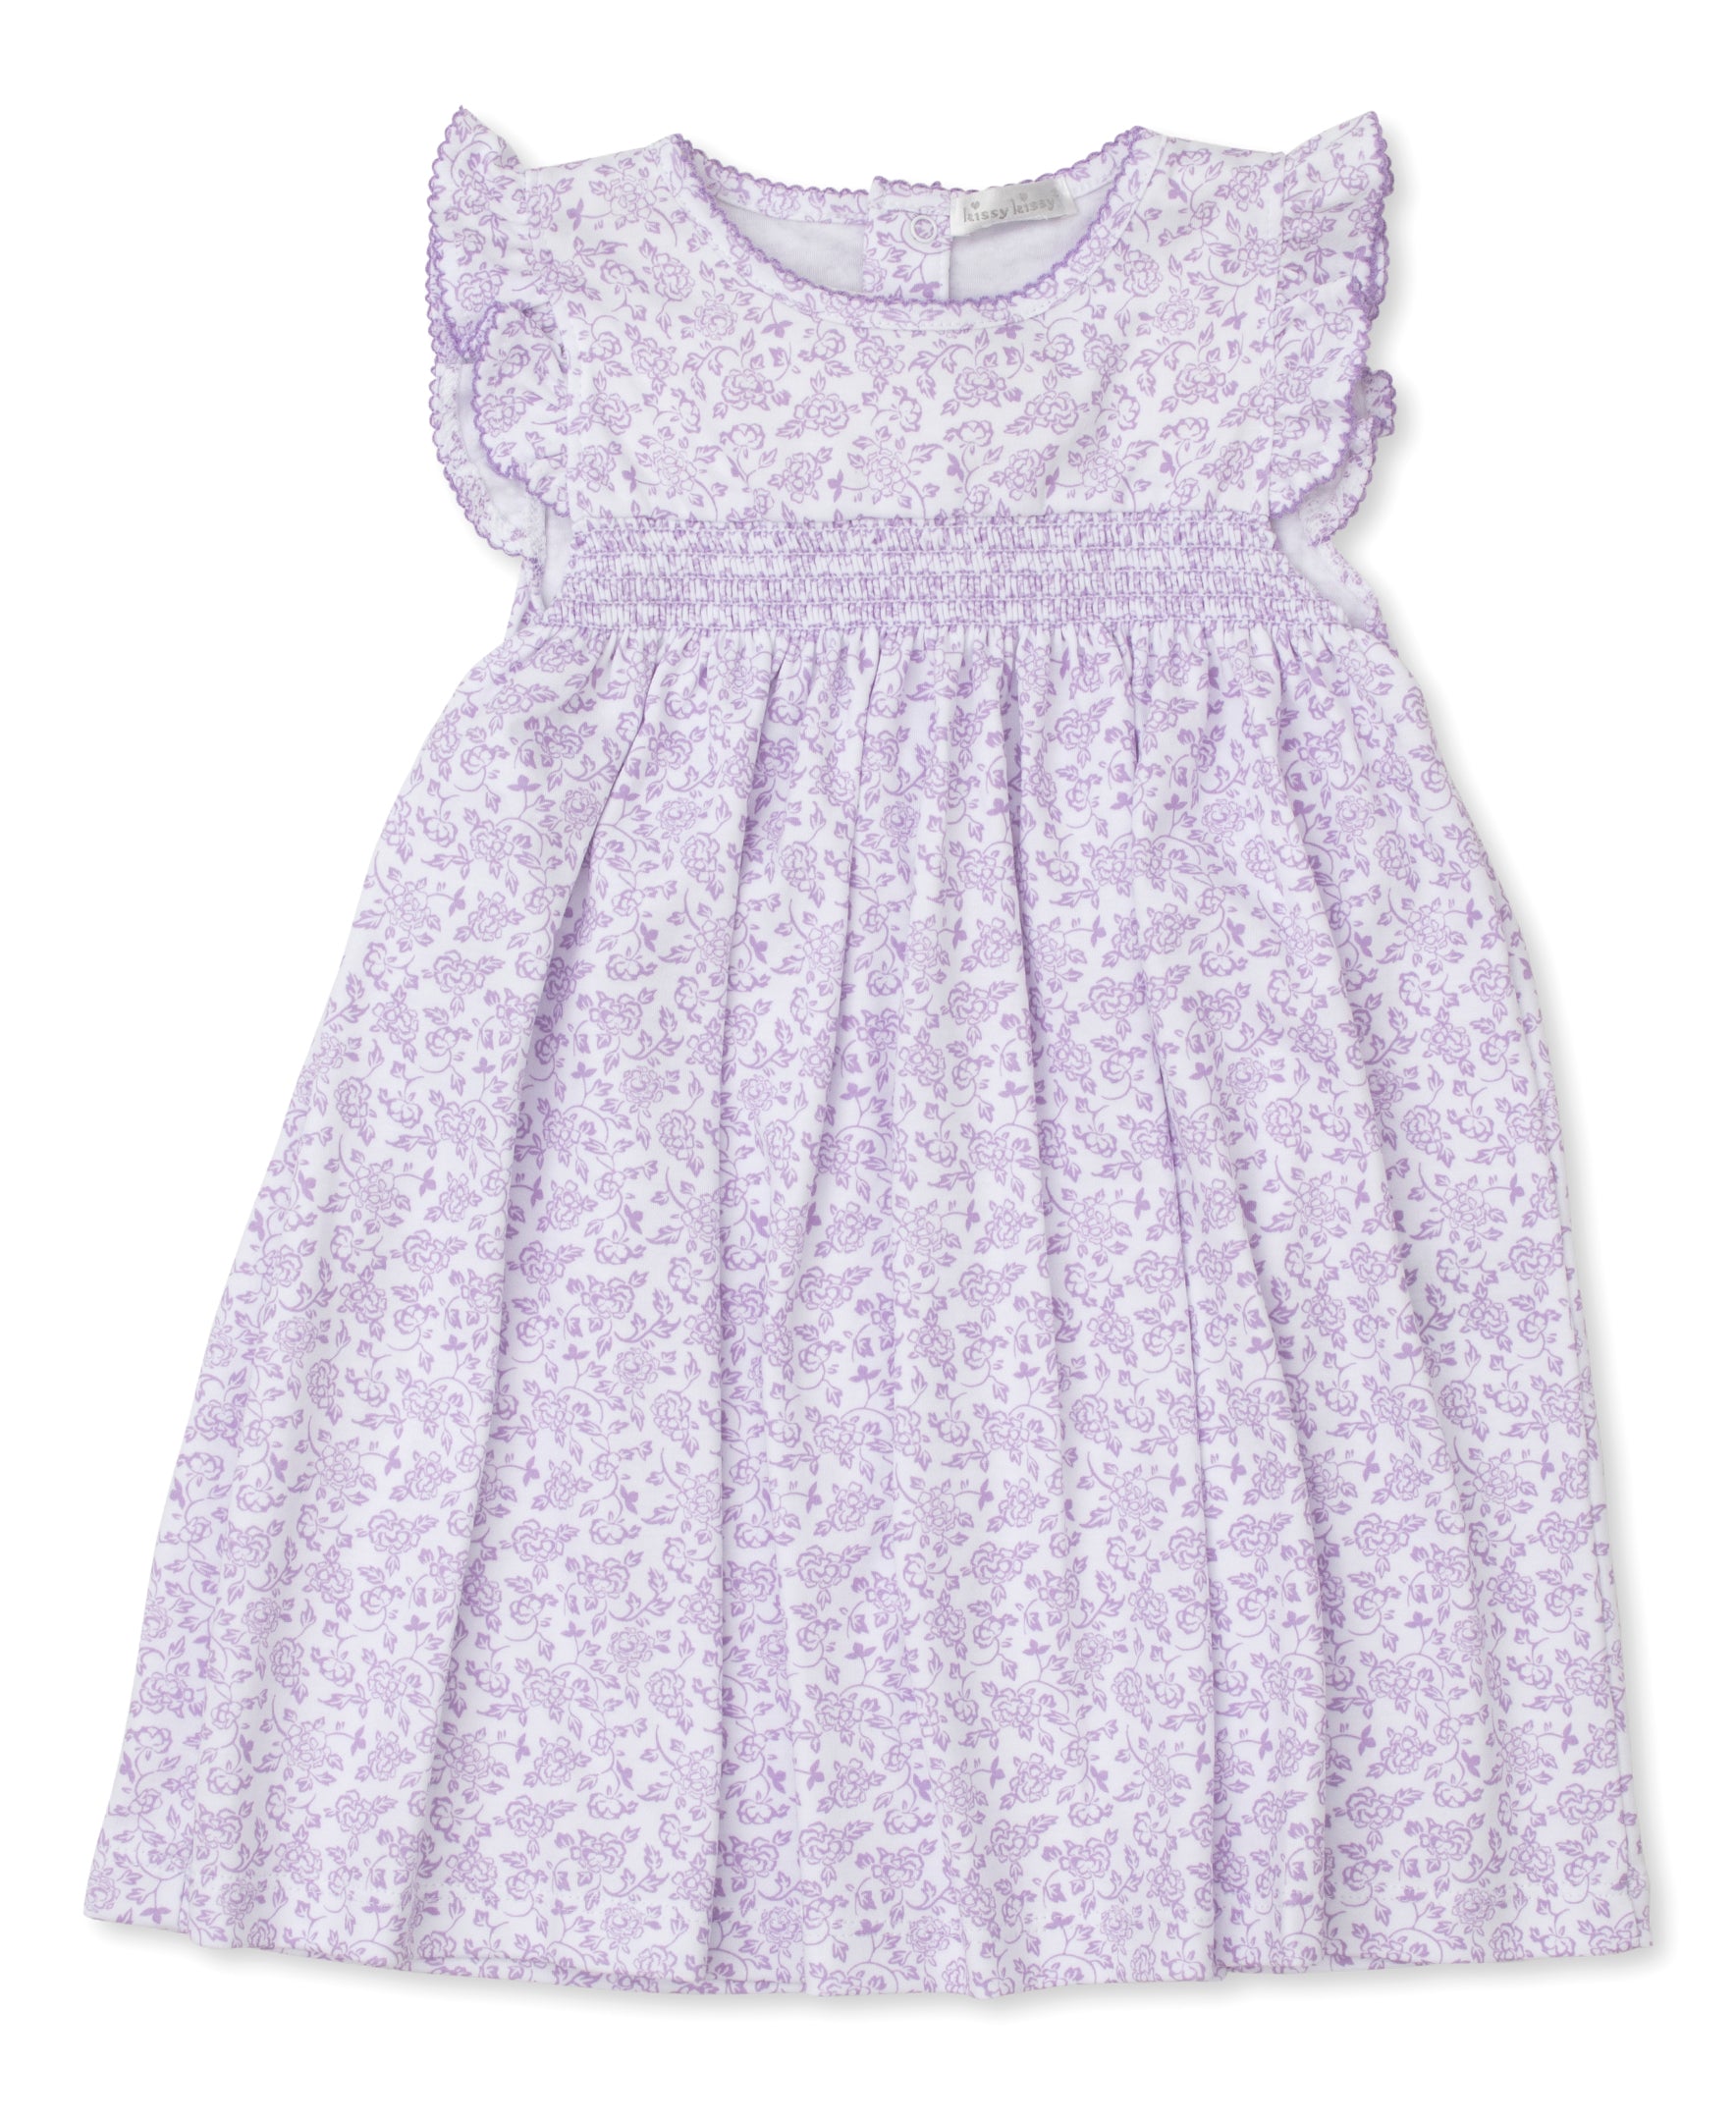 Blooming Vines Lilac Toddler Dress - Kissy Kissy